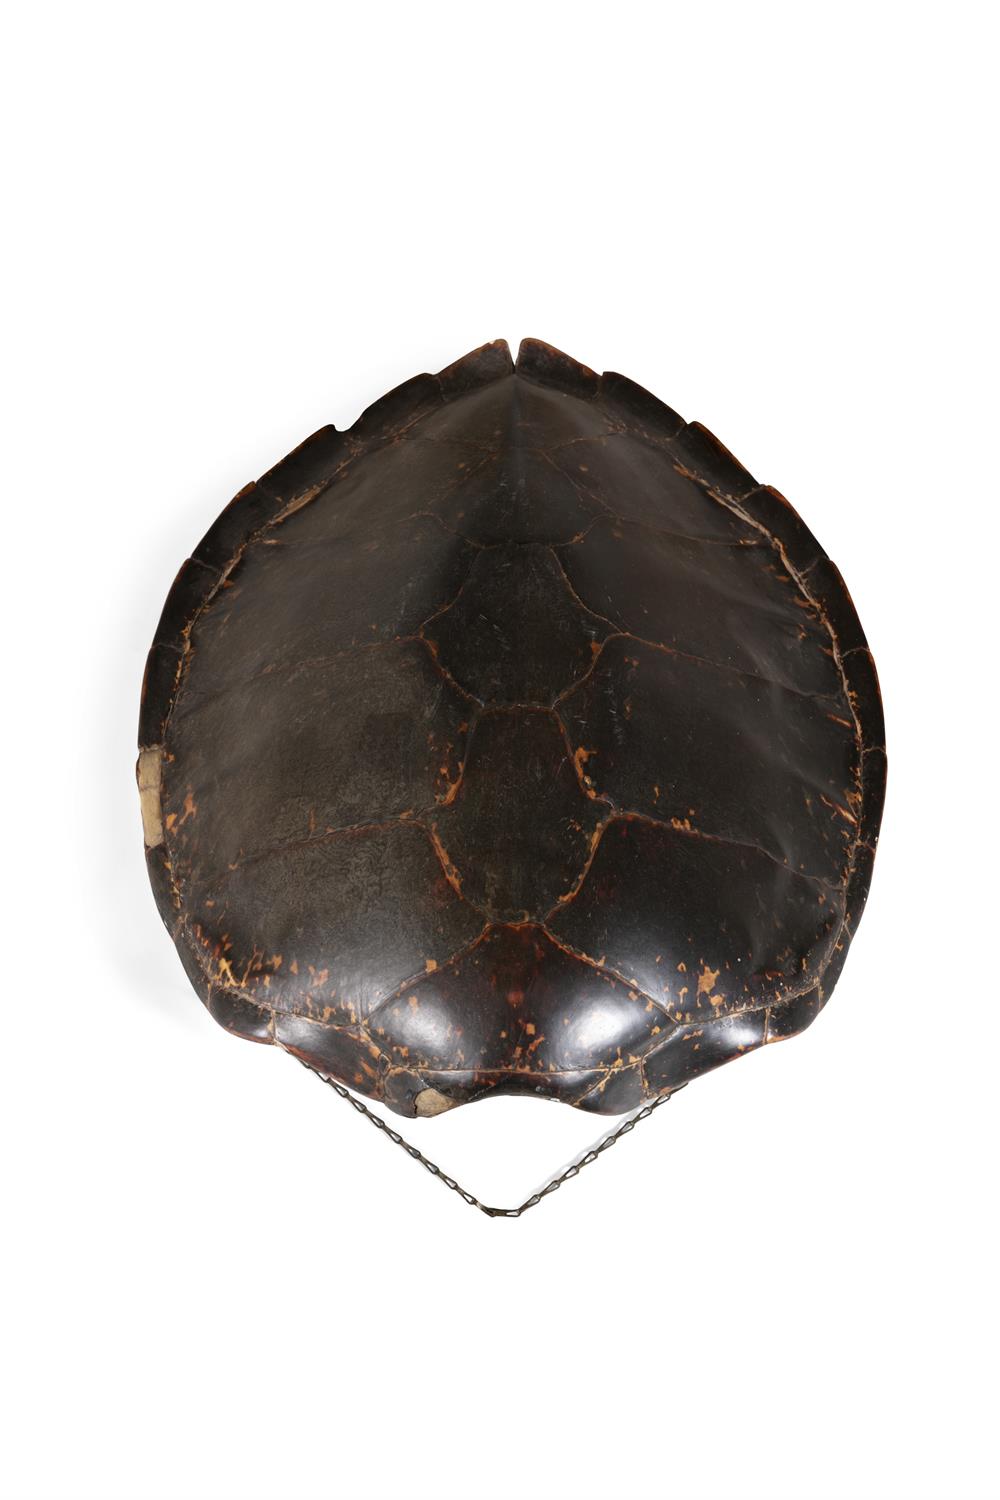 A TORTOISE SHELL 19cm high, 63cm deep